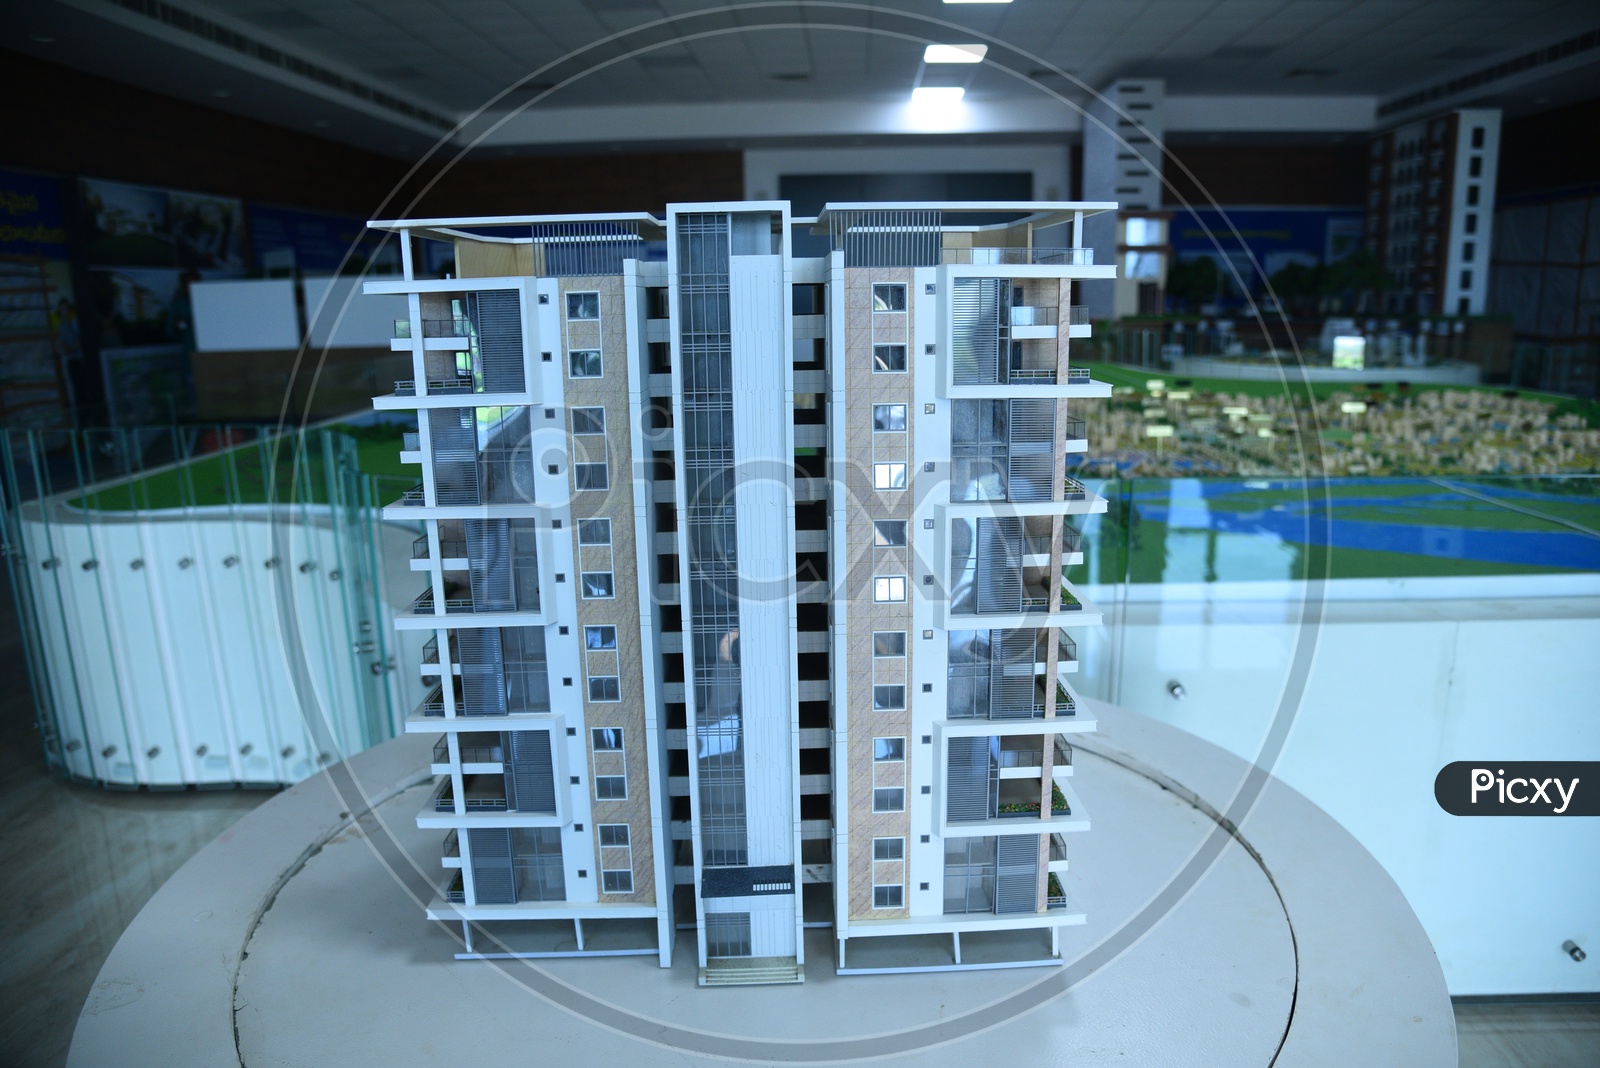 A Building Model Presentation By a Model Scale Miniature Presentation